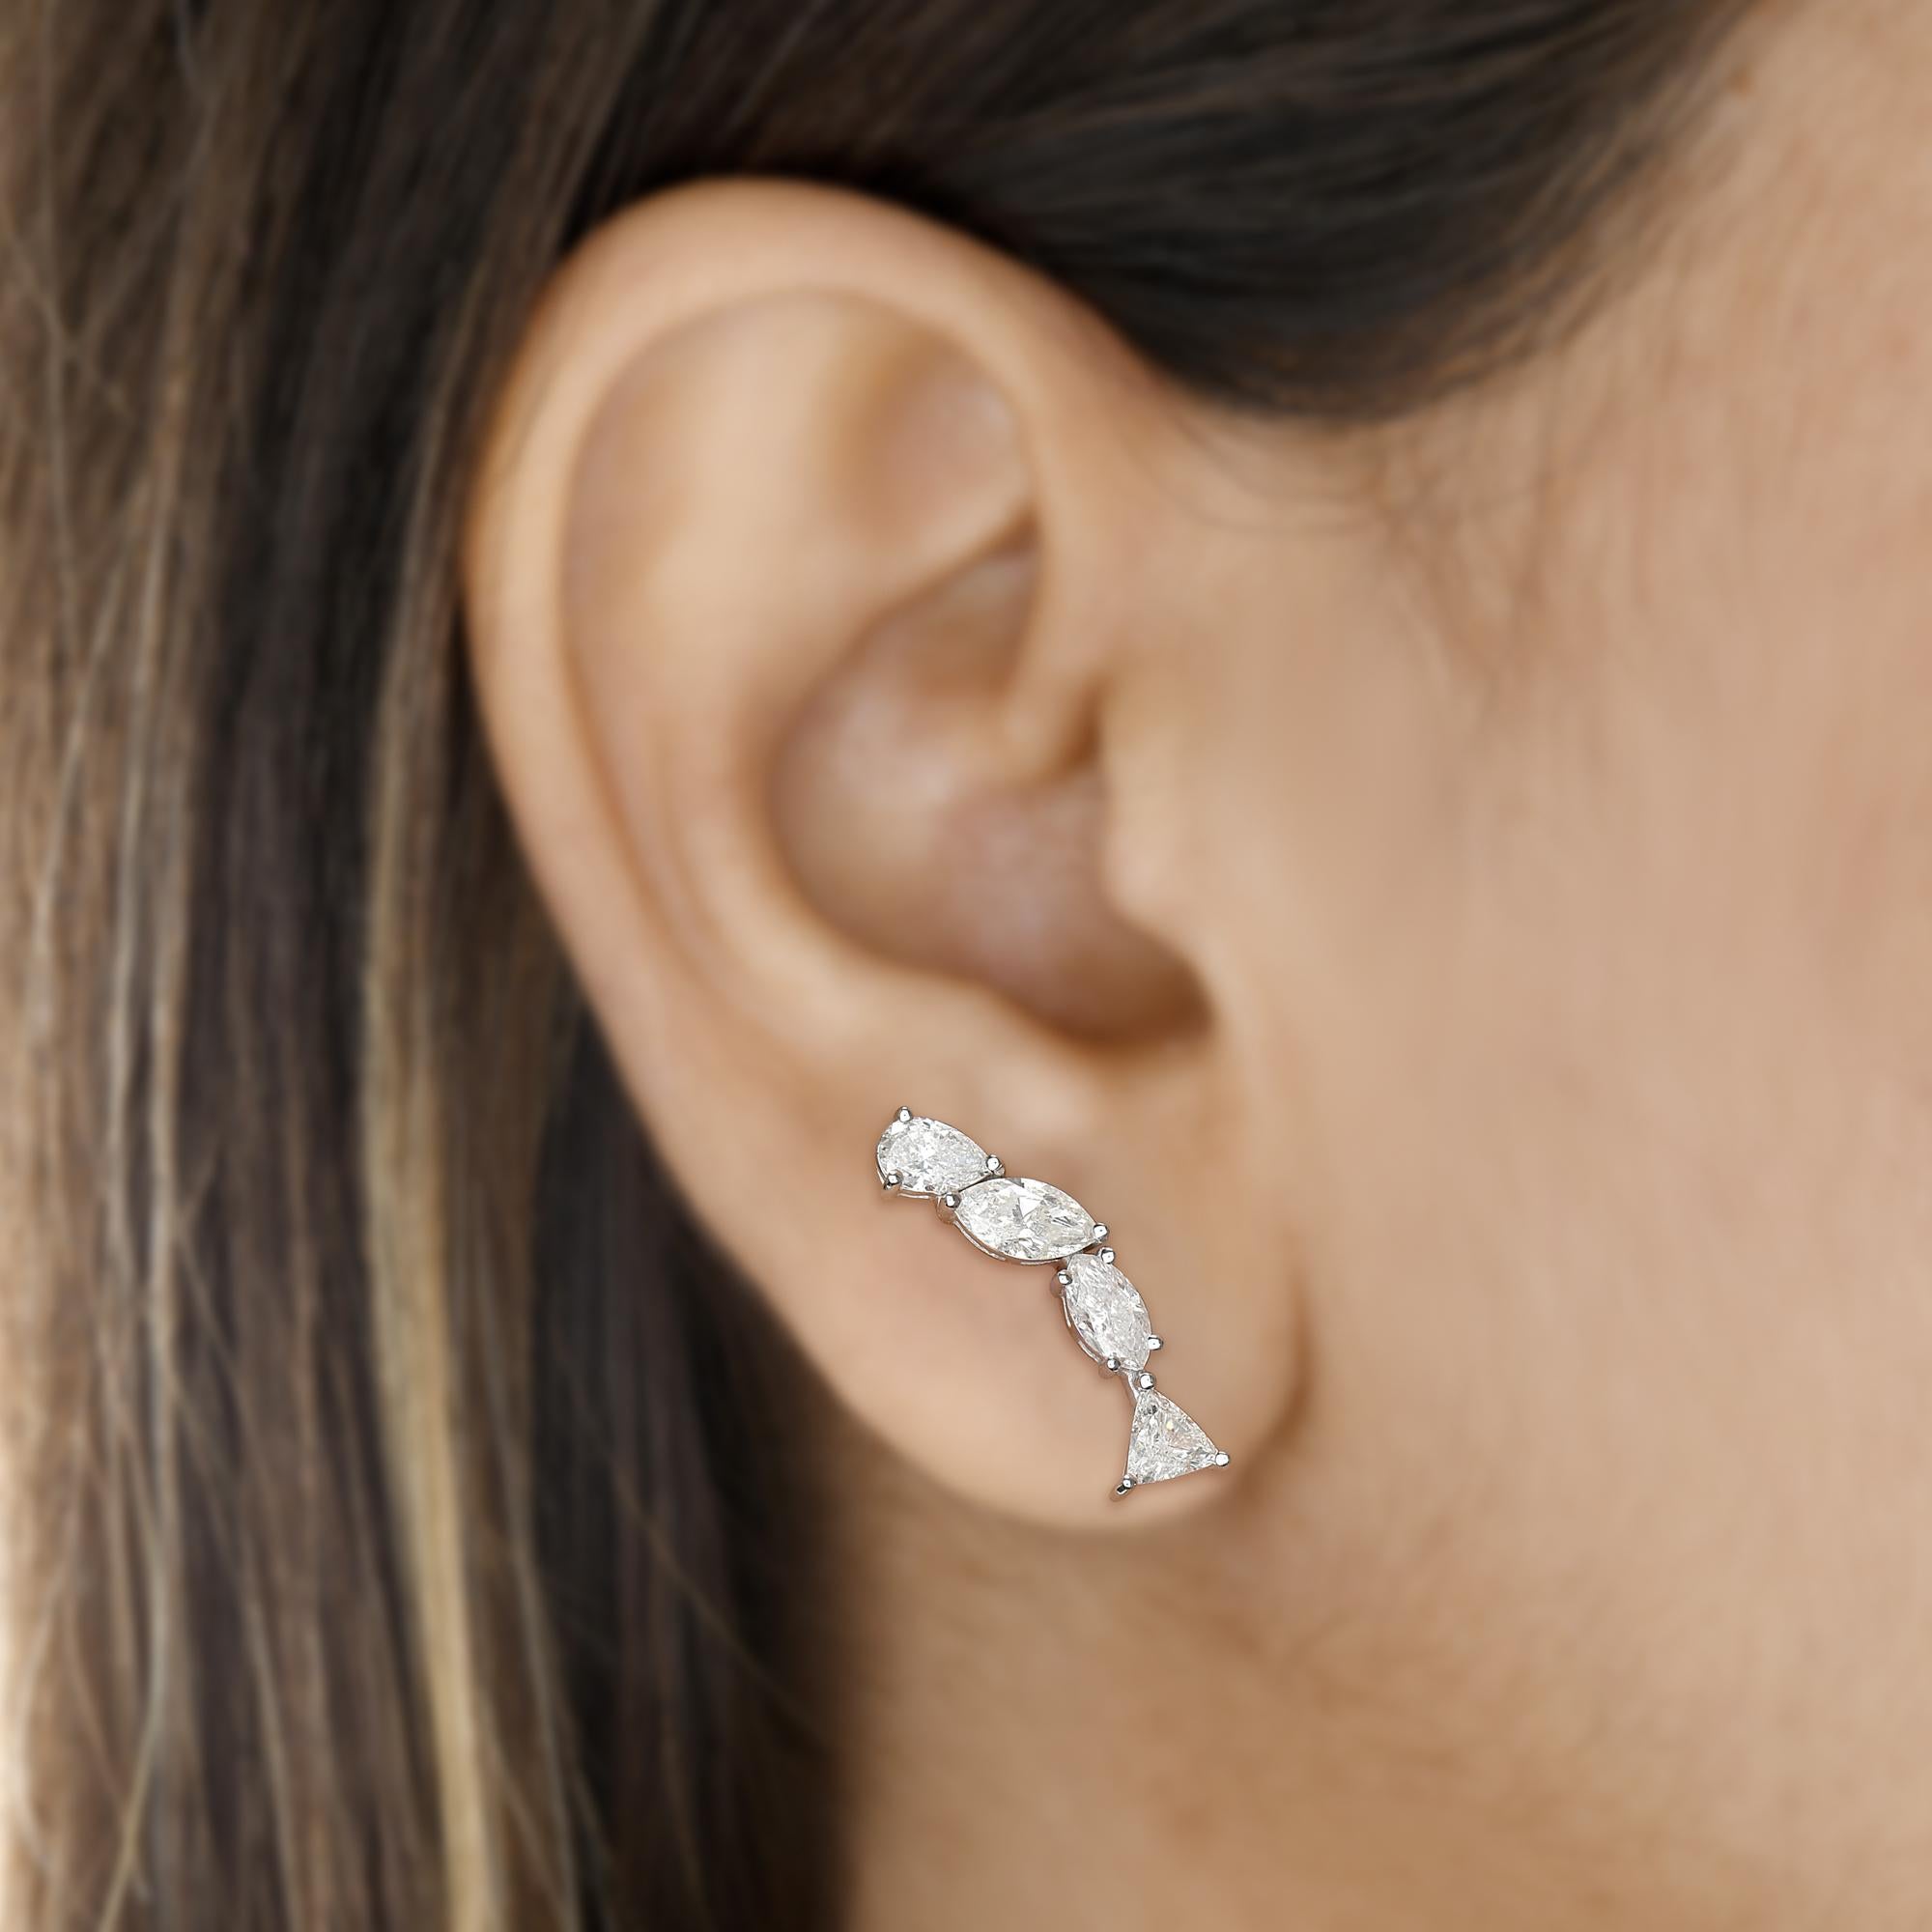 Women's 2.22 Carat Marquise Pear Trillion Shape Diamond Earrings 10k White Gold Jewelry For Sale